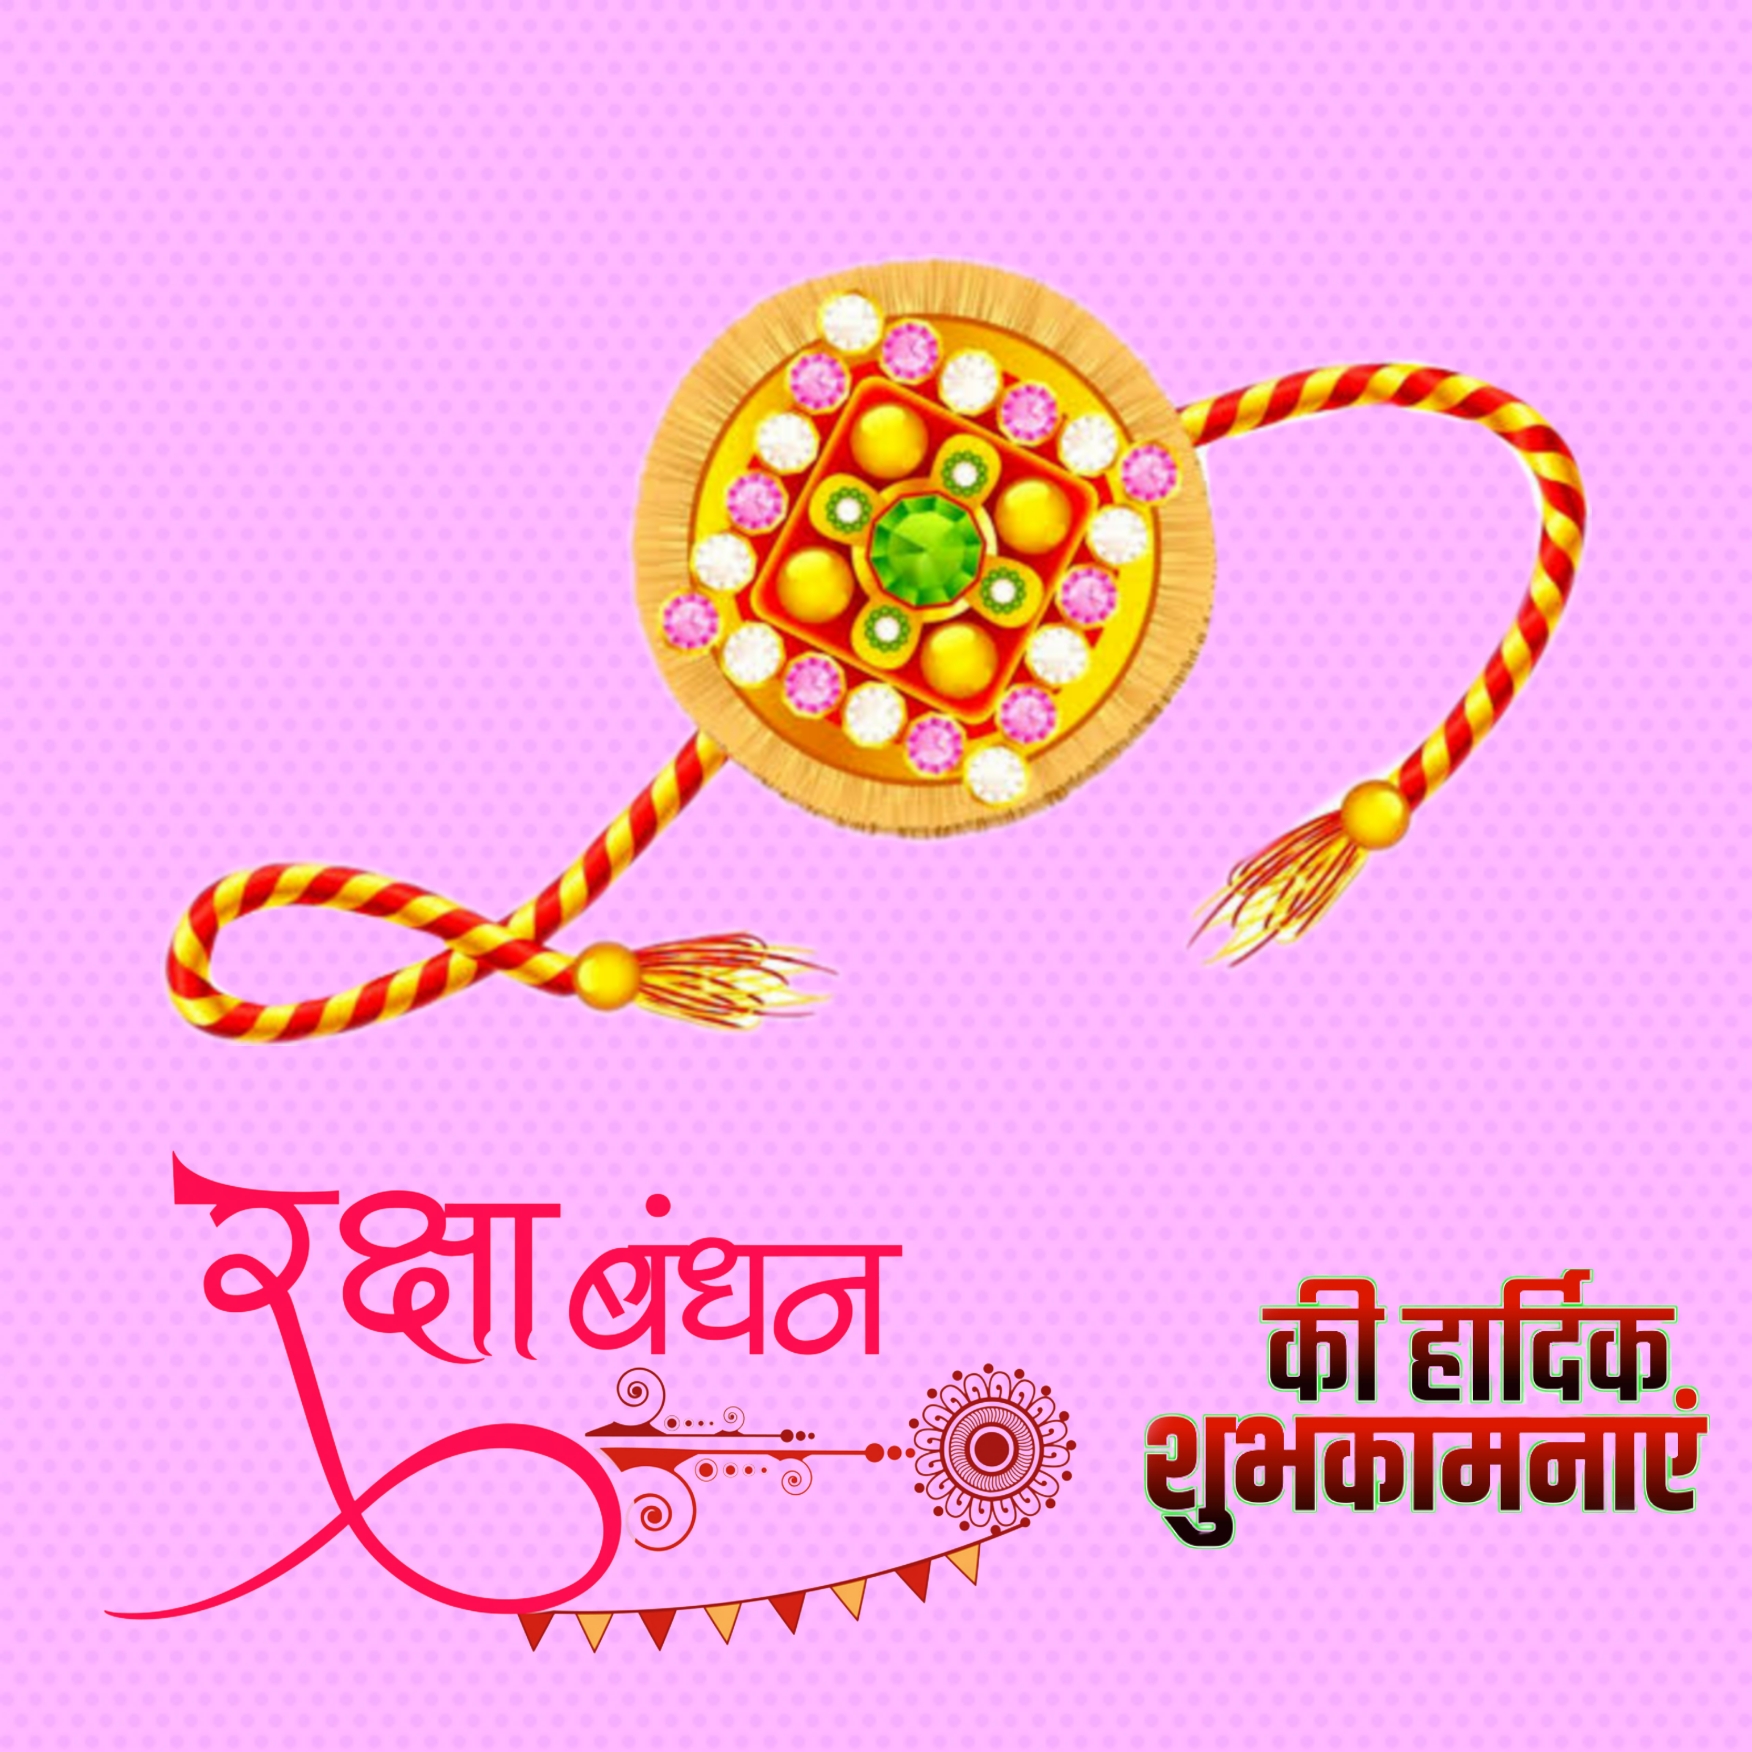 Happy Rakshabandhan Images in Hindi